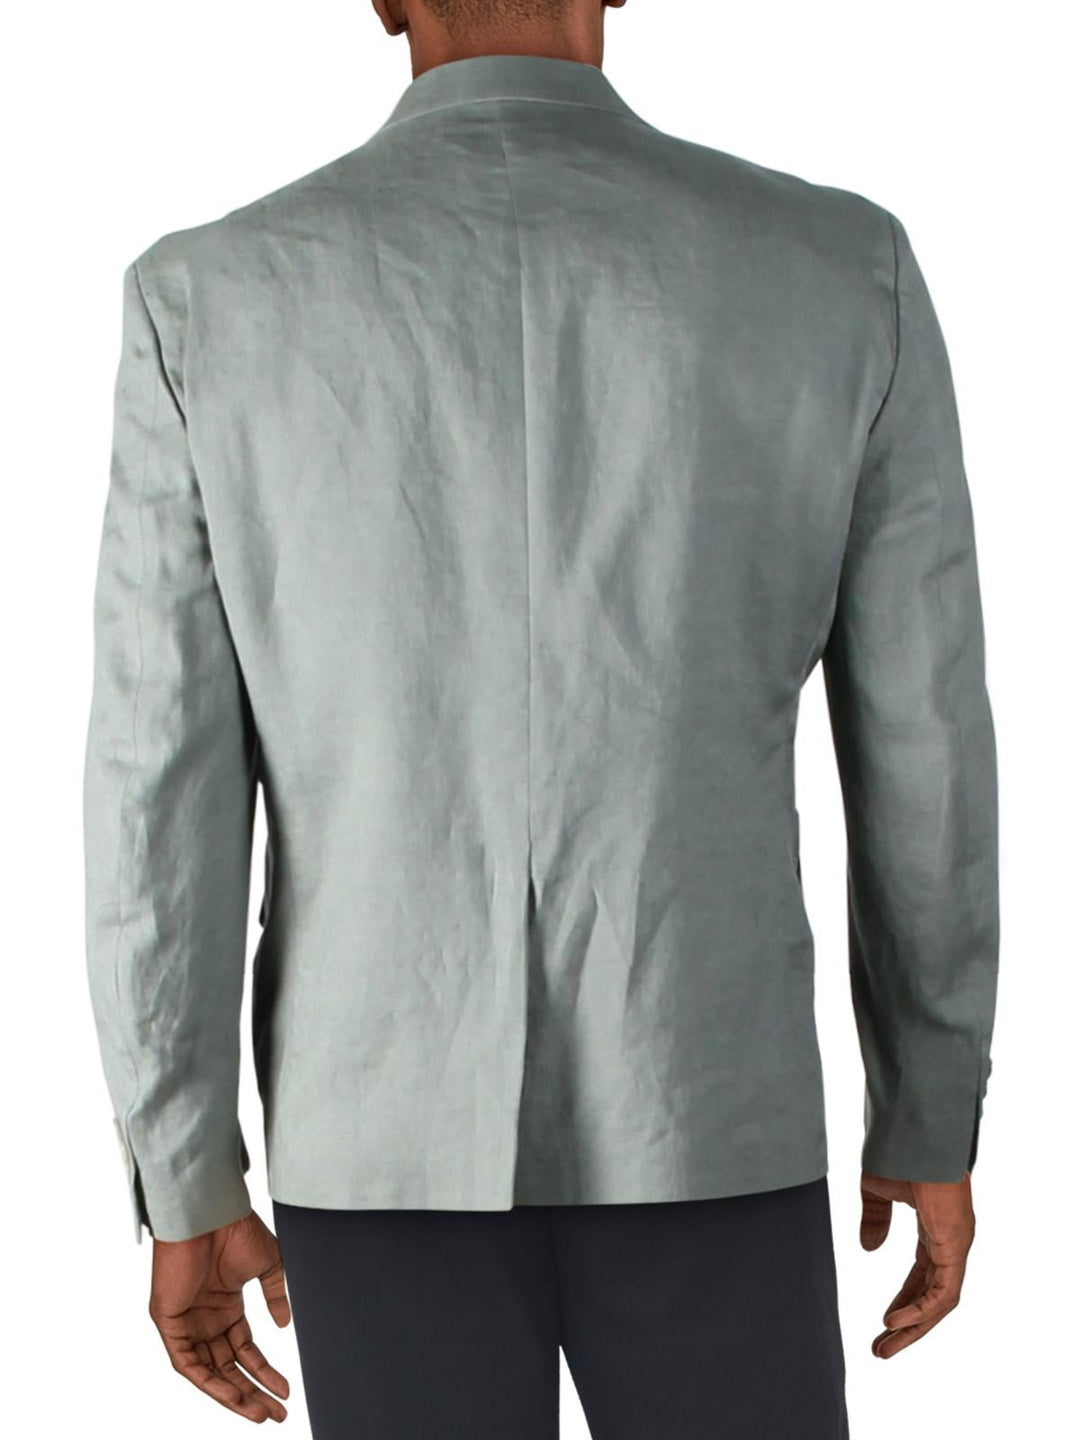 Ralph Lauren Men's UltraFlex Classic Fit Sage Linen Sport Coat Green Size 46